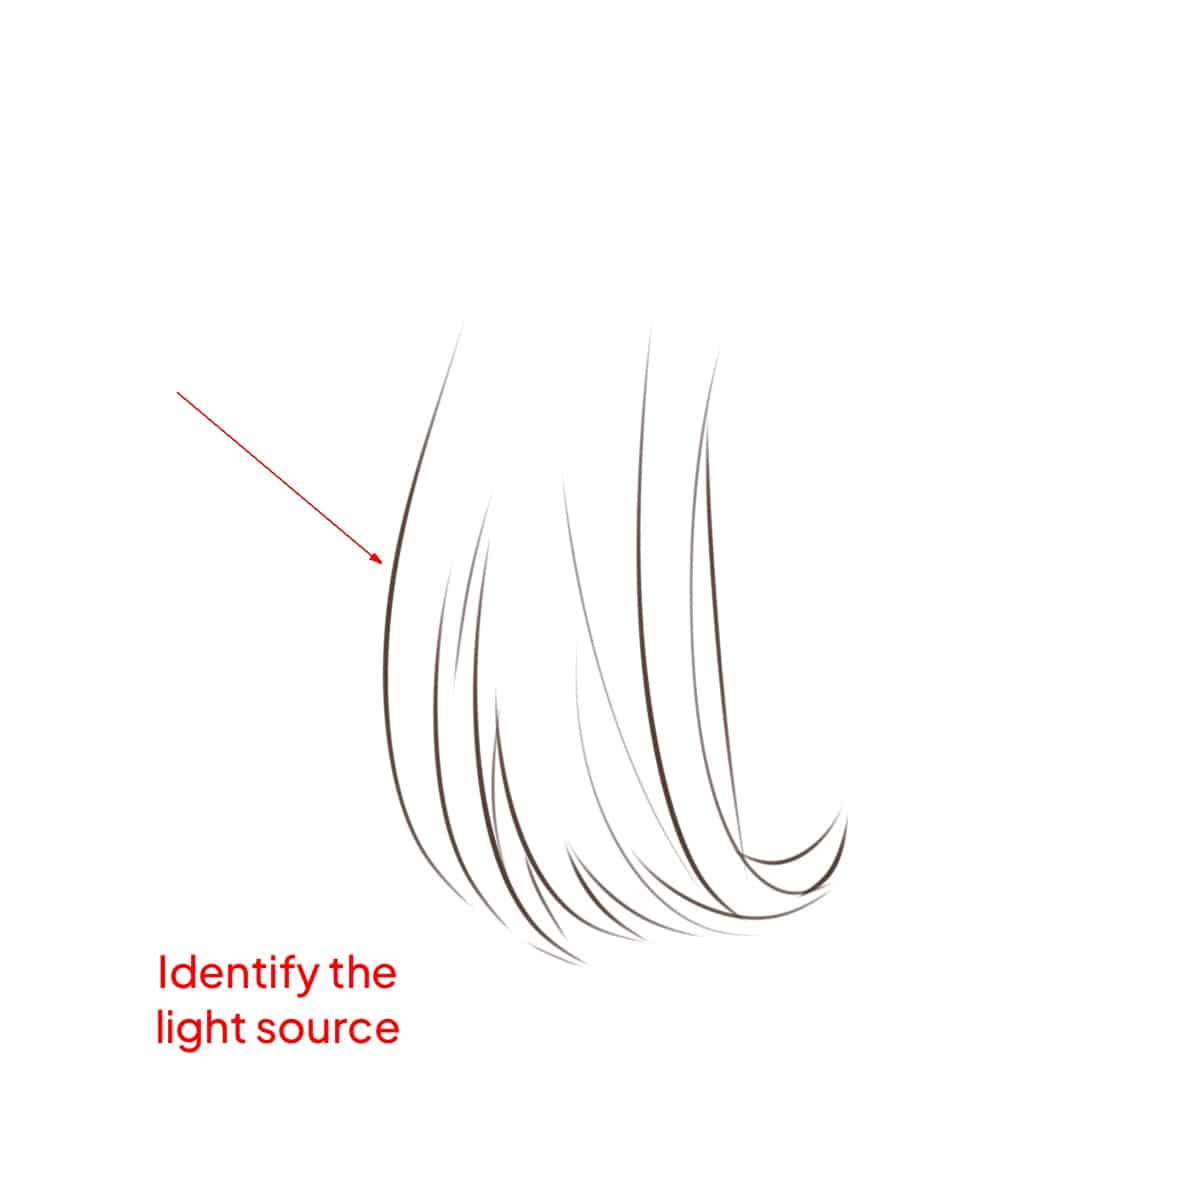 Hair sketch drawn in Procreate application